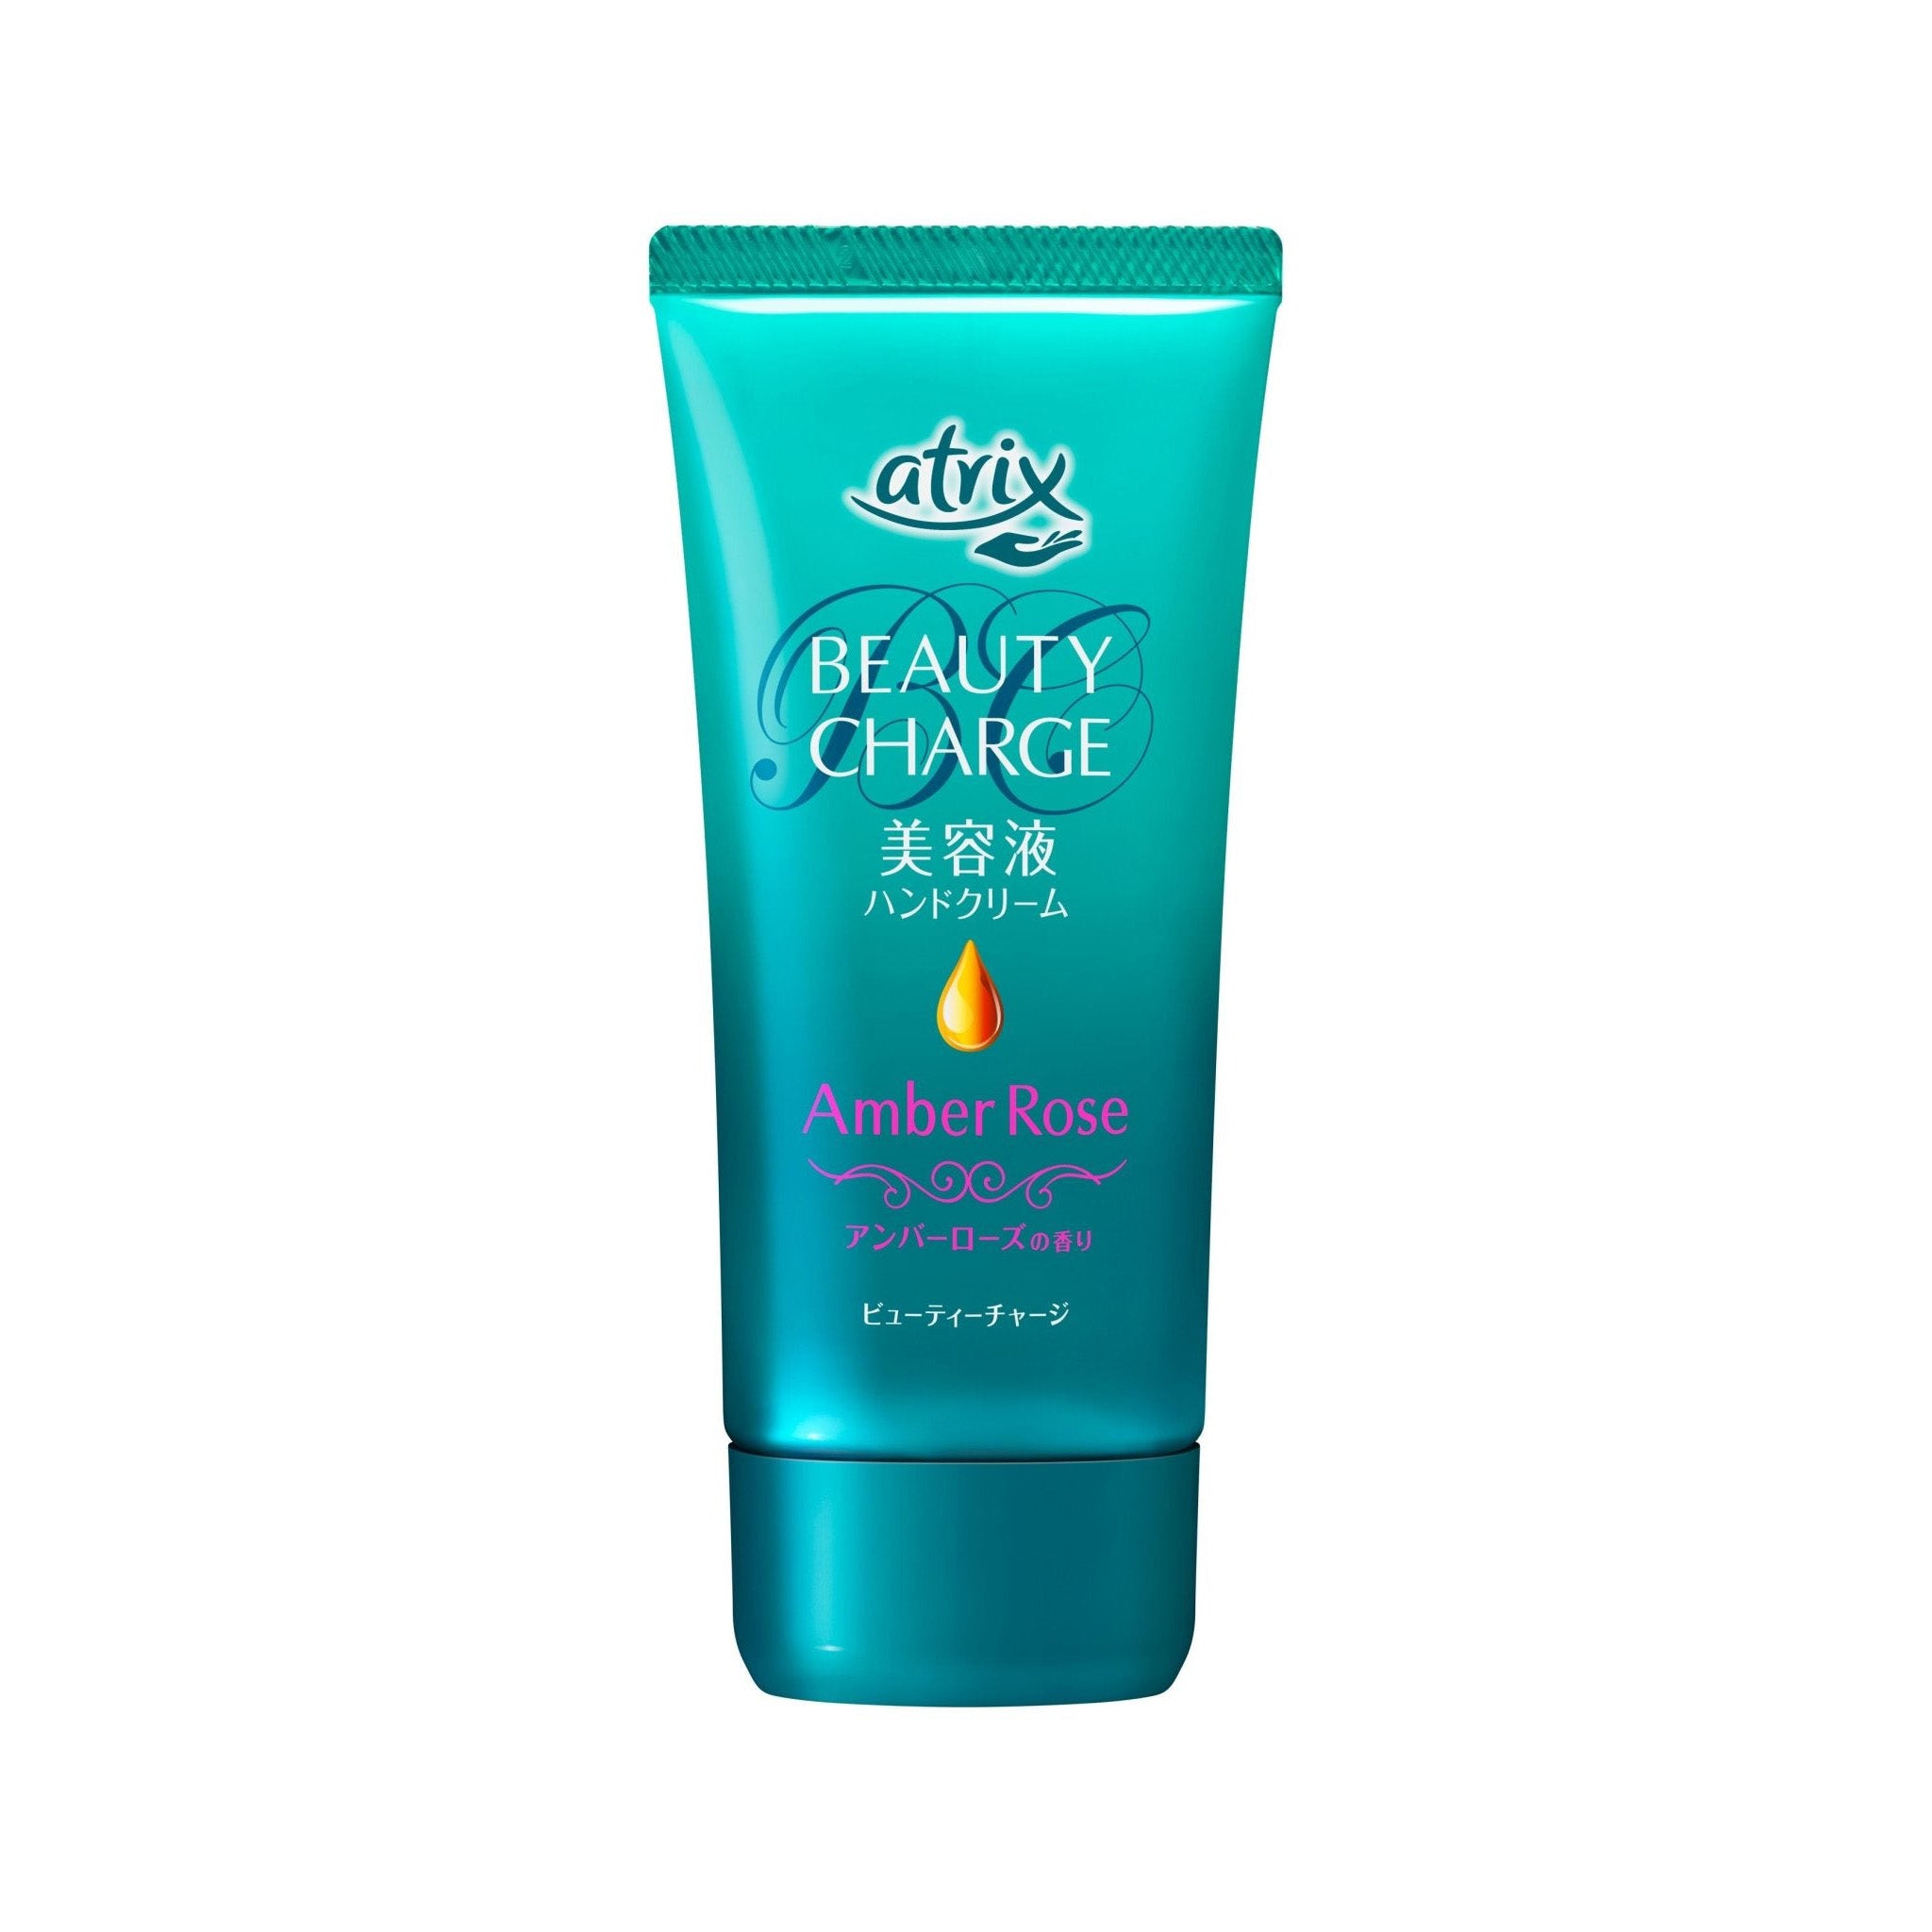 KAO Atrix Beauty Charge Hand Cream Amber Rose 80g